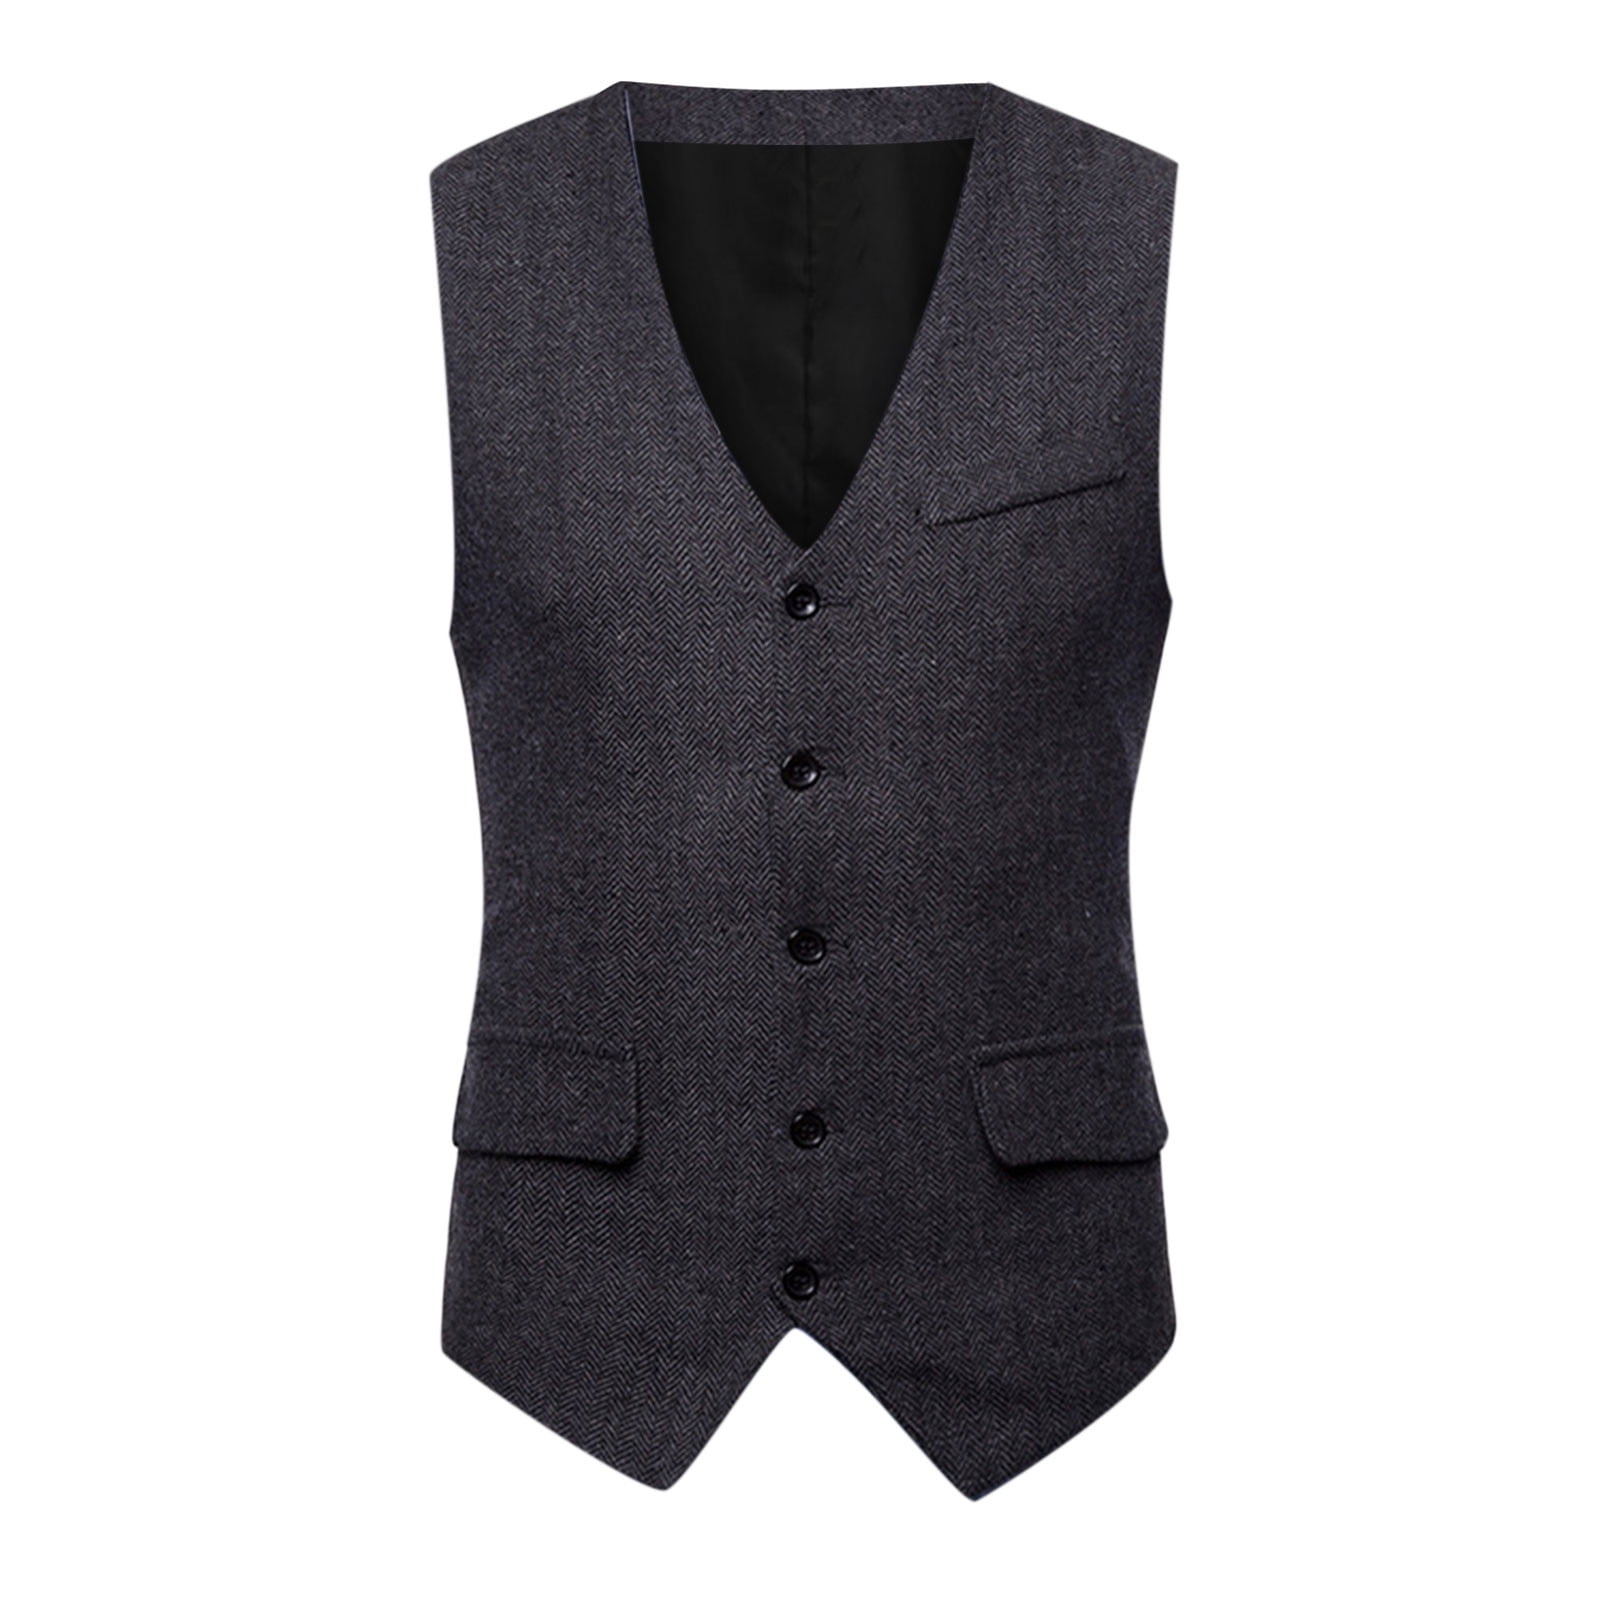 ZCFZJW Men's Suit Vest Formal Wedding Slim Fit Single-Breasted Sleeveless  V-Neck Have Pockets Solid Dress Wedding Waistcoat Prom Tuxedo #01-Black XXL  